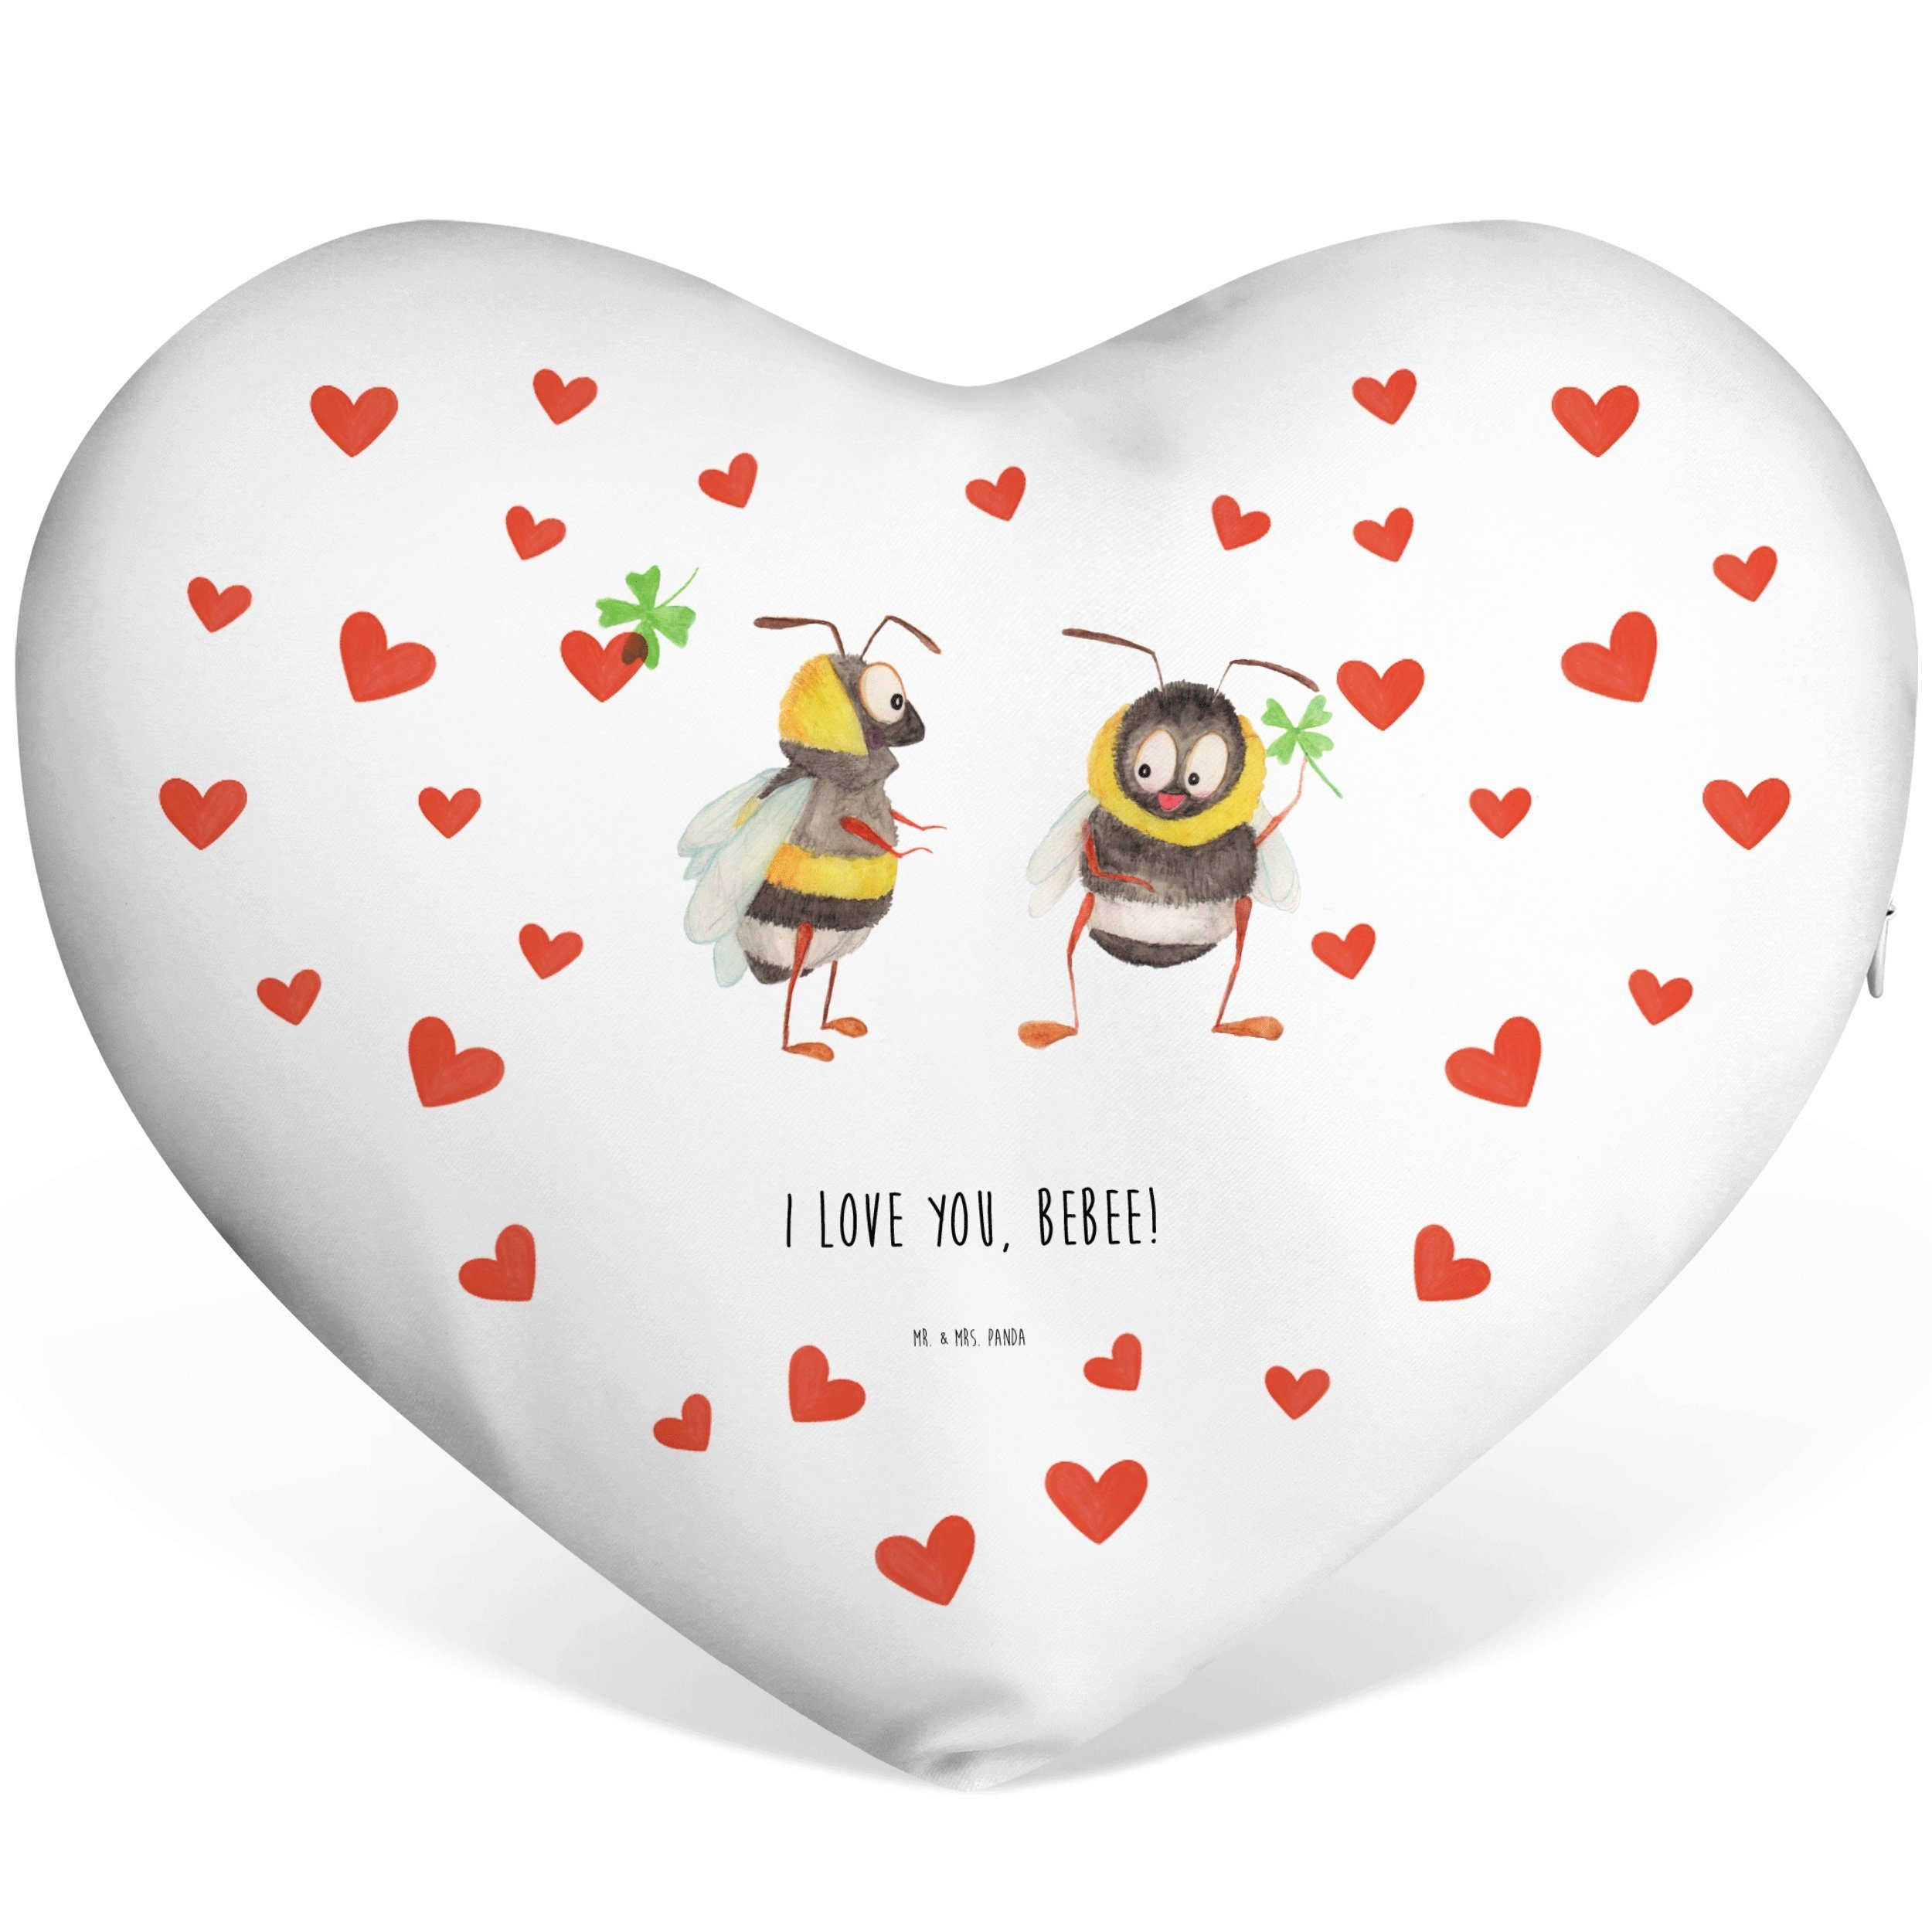 Mr. & Mrs. Panda Dekokissen Bienen Paar - Weiß - Geschenk, Liebesgeschenk, Herzform, Liebesbeweis